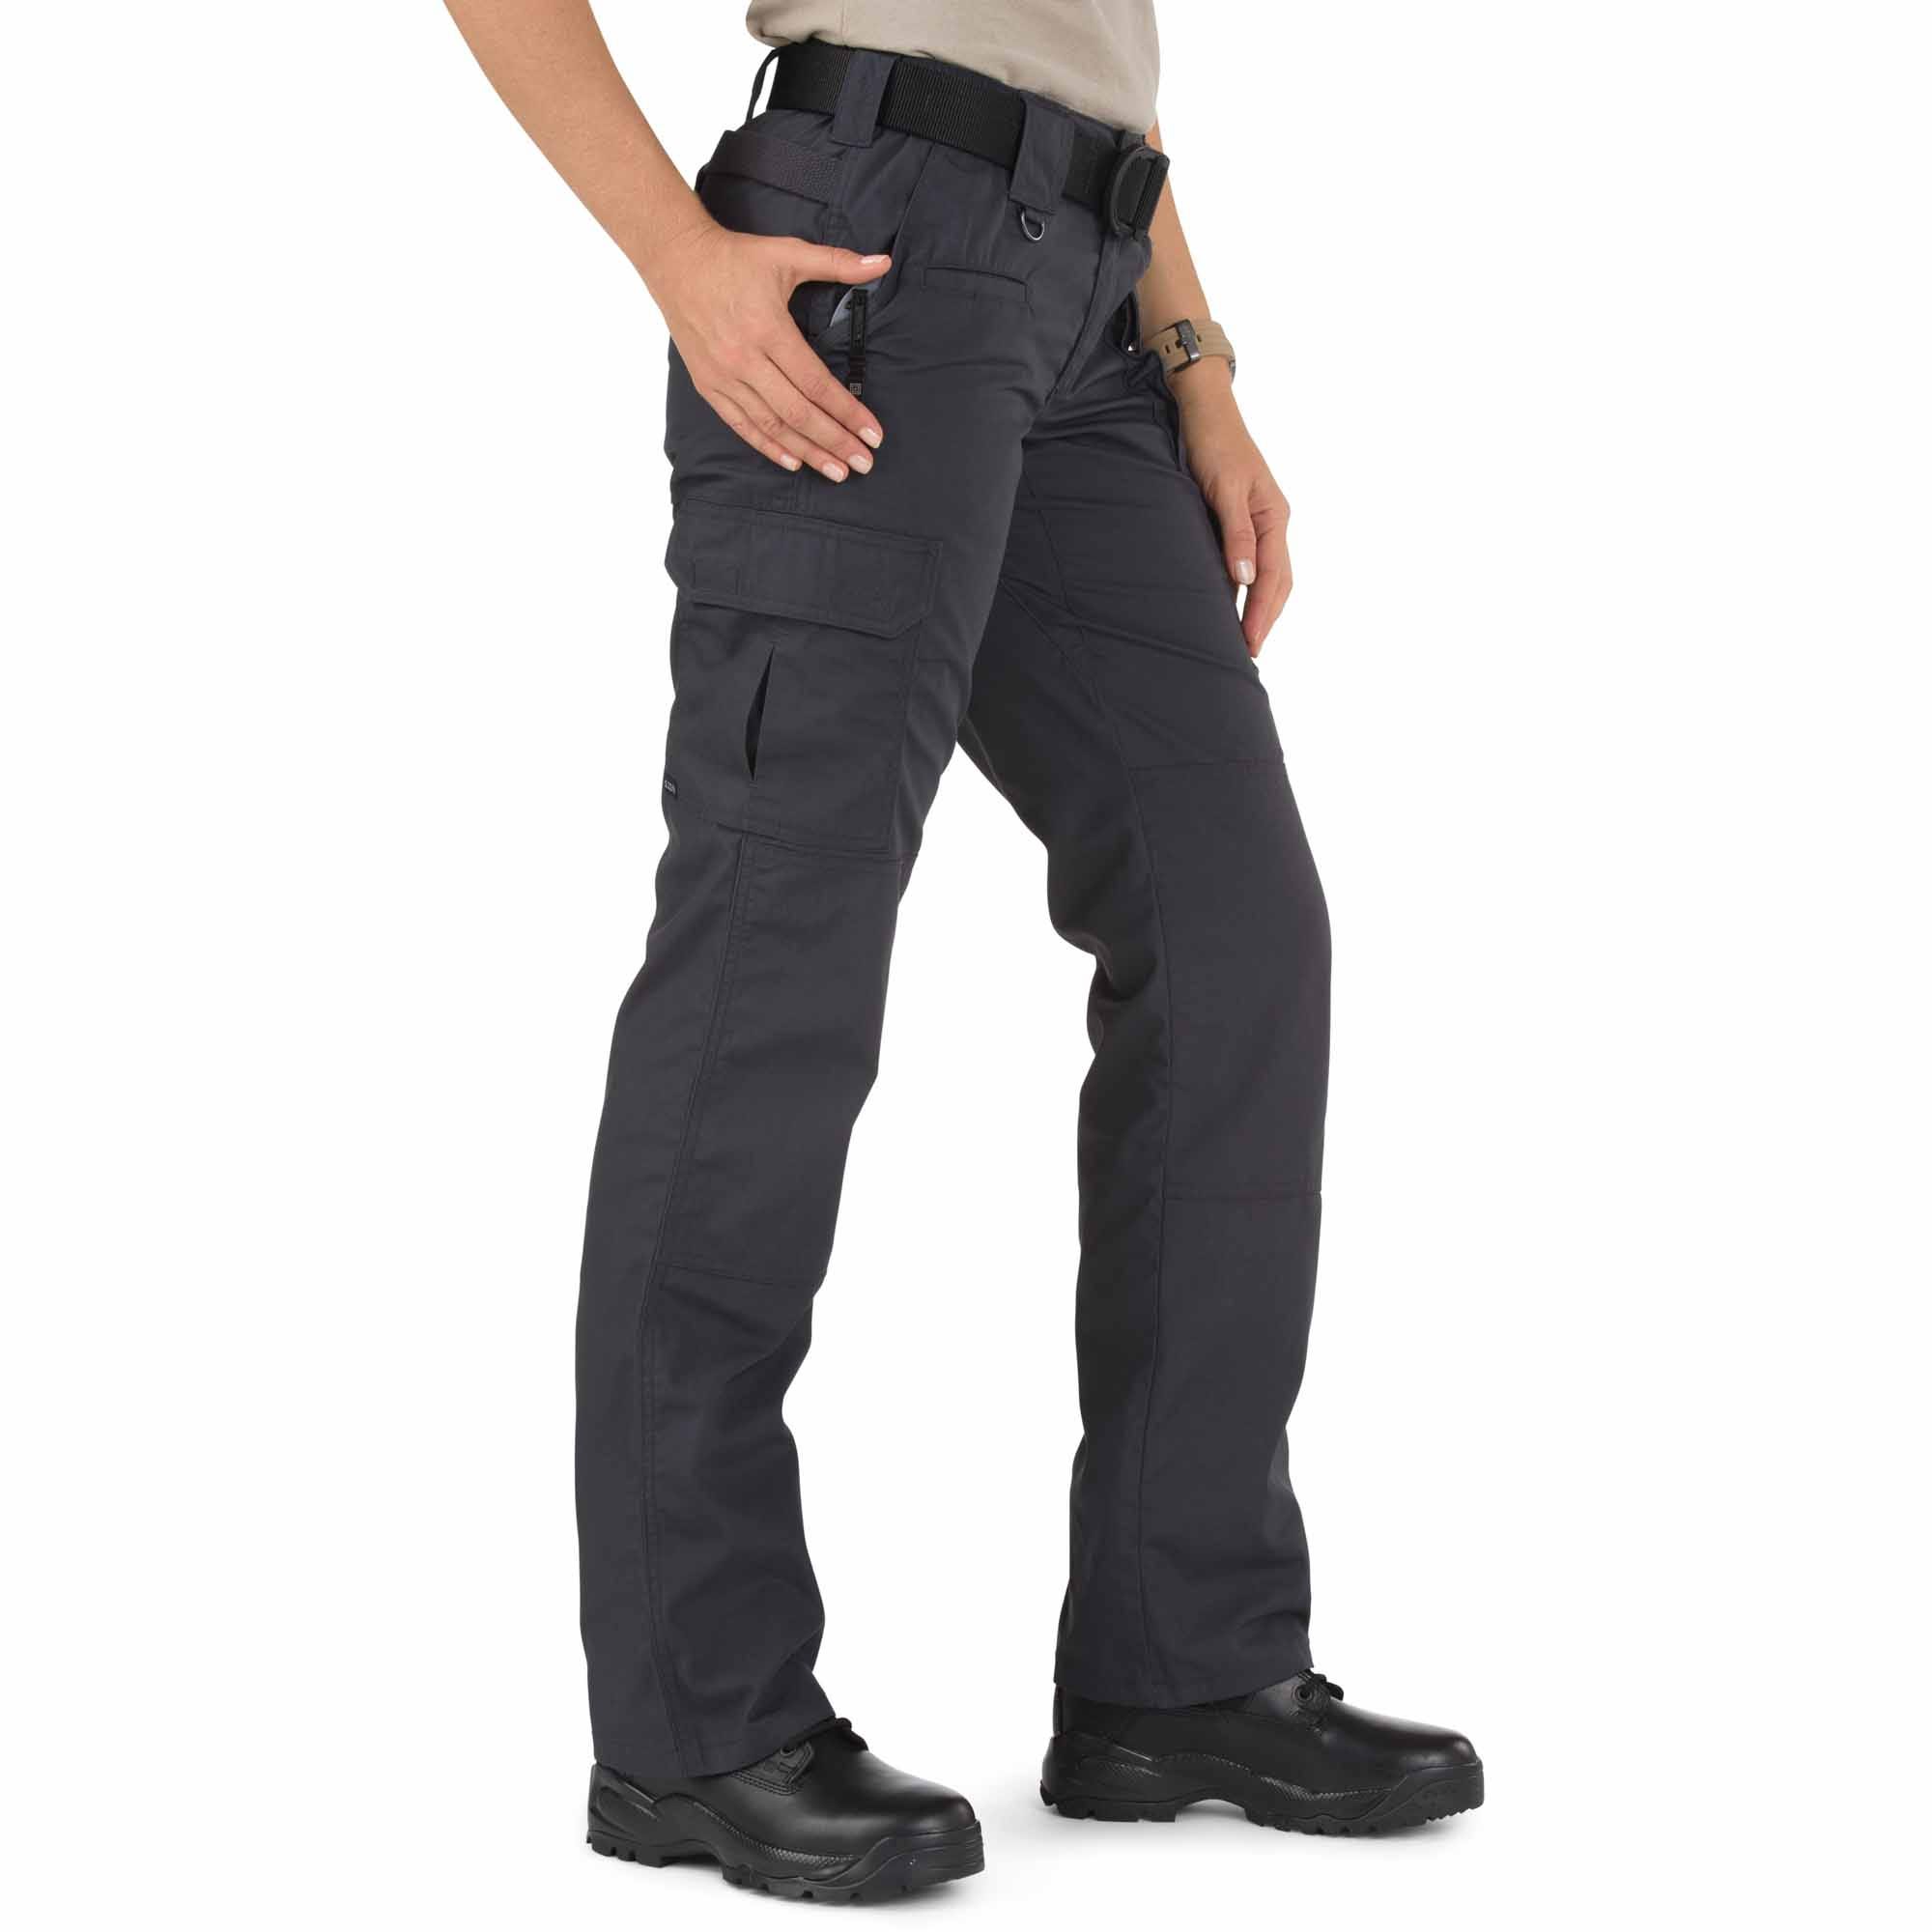 Women tactical pants